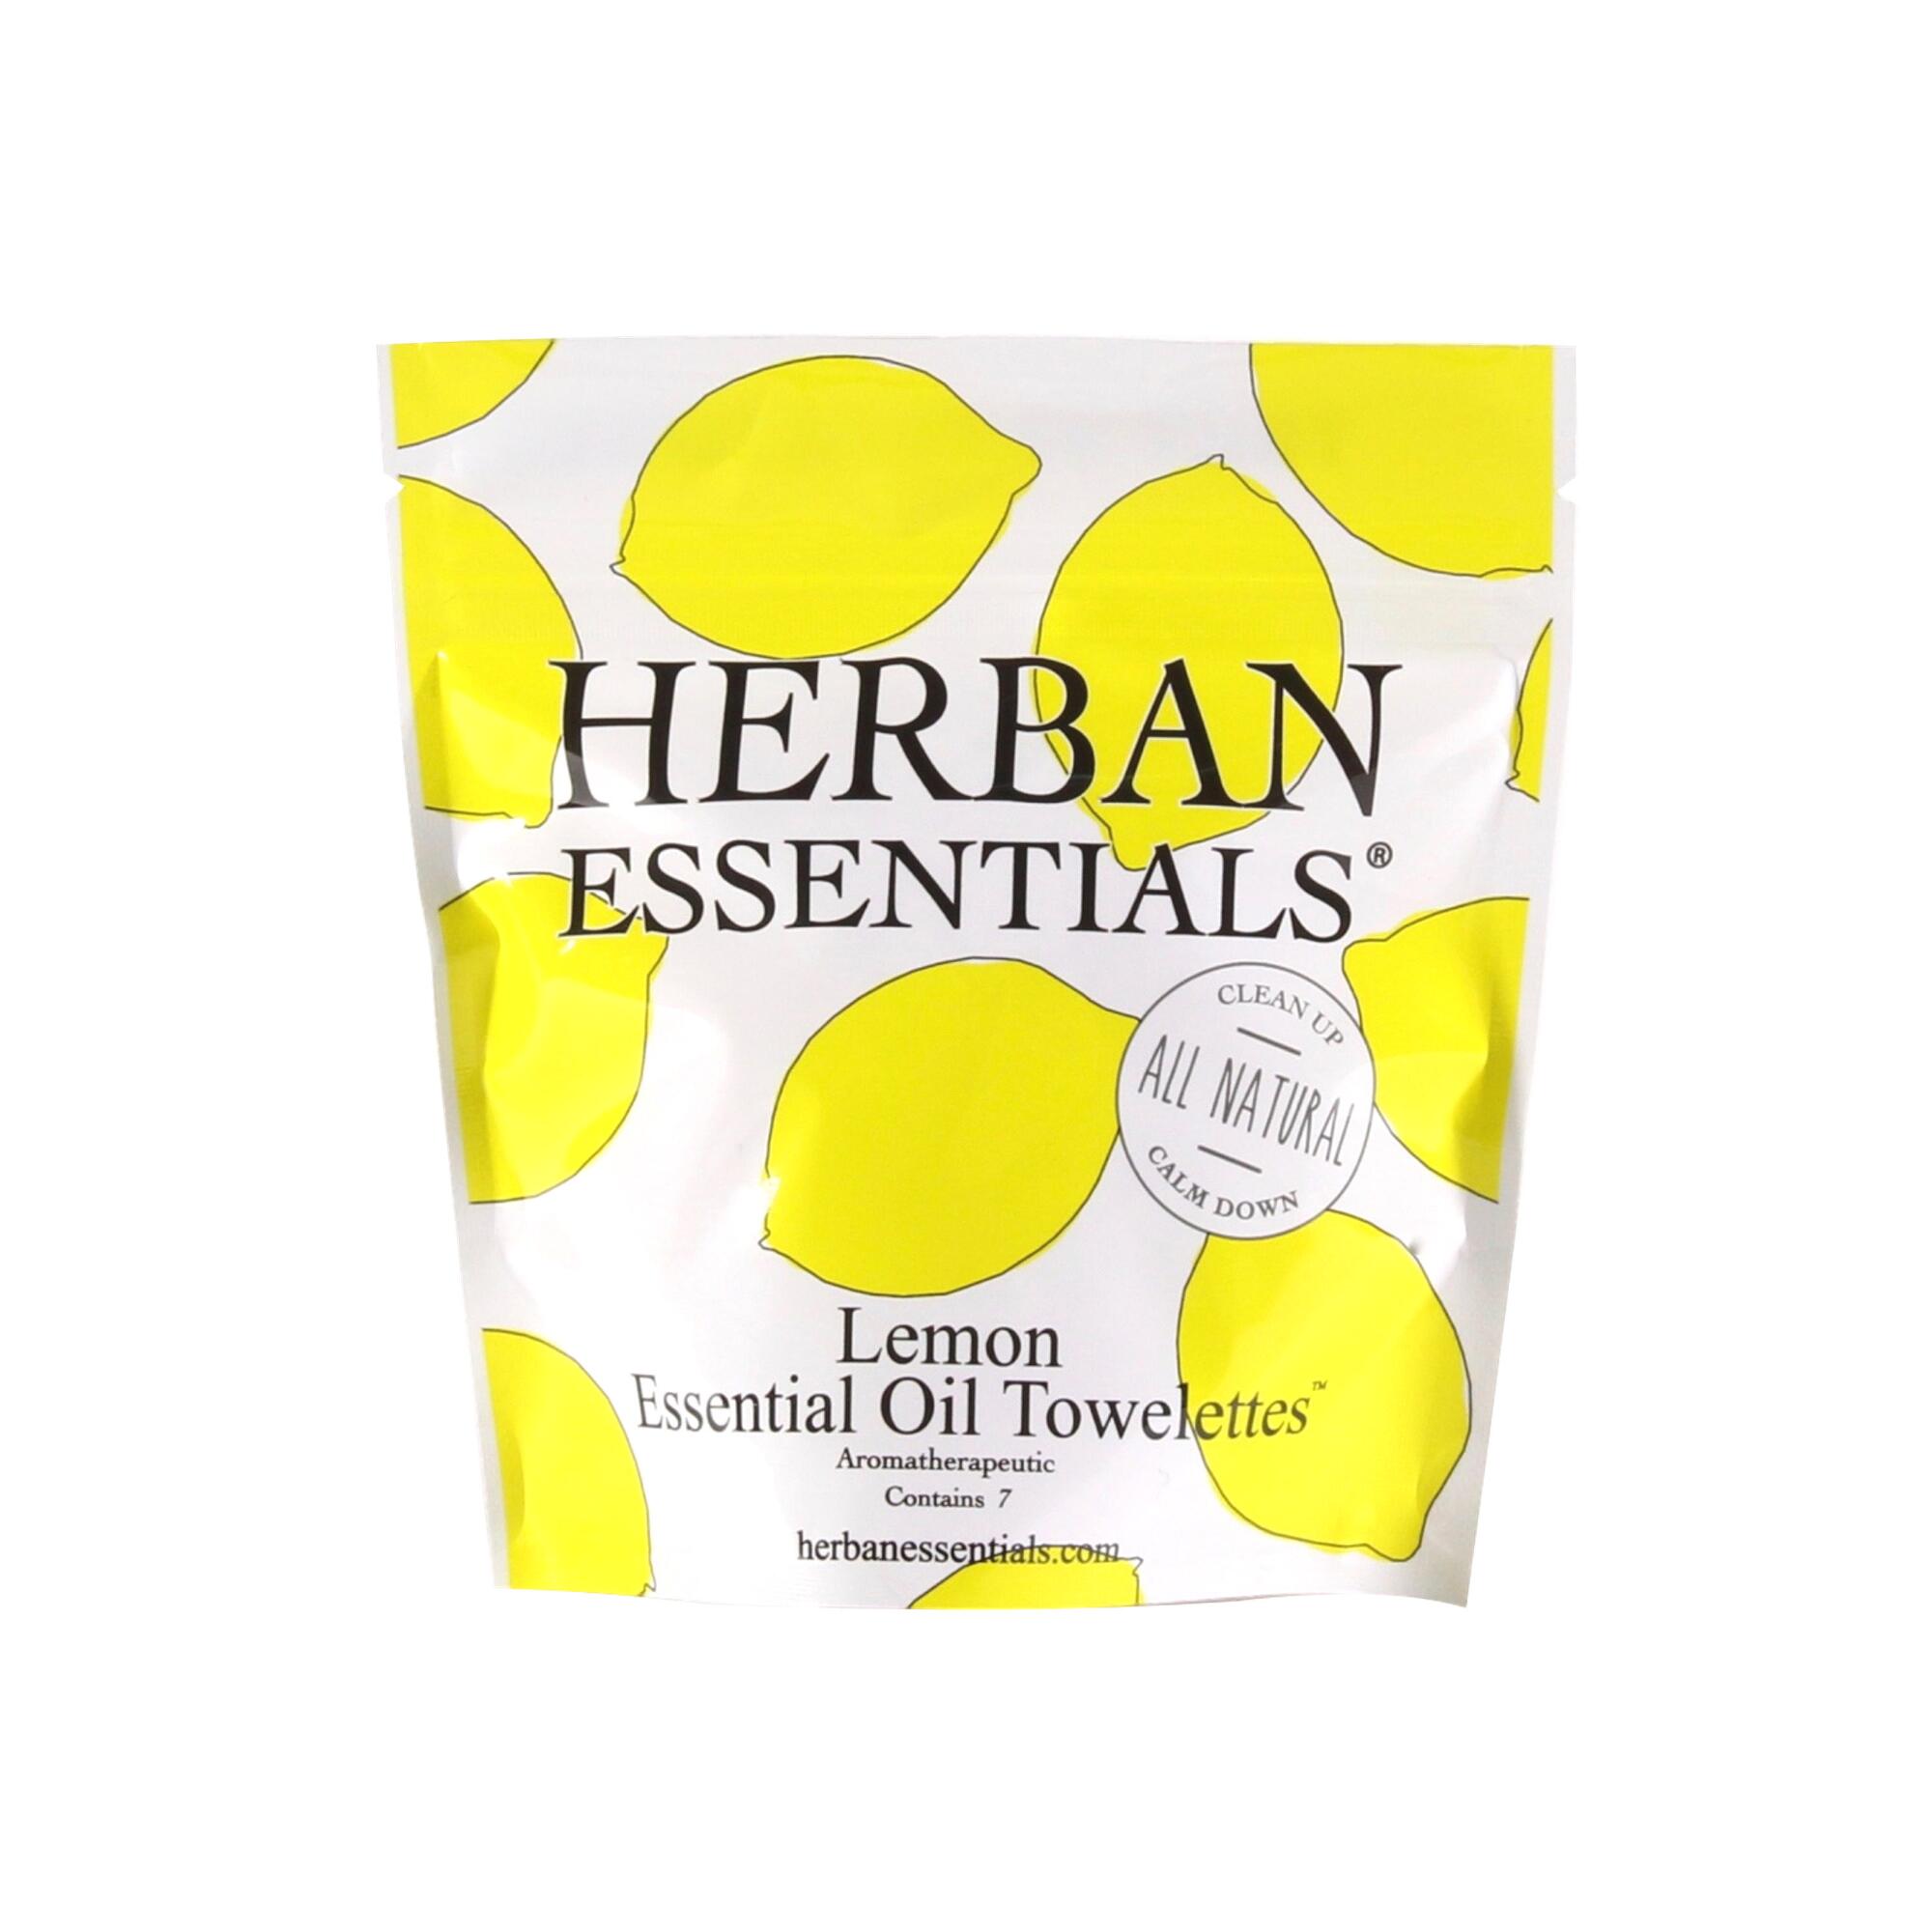 Herban Essentials Lemon Essential Oil Wipes 7 Count by World Market